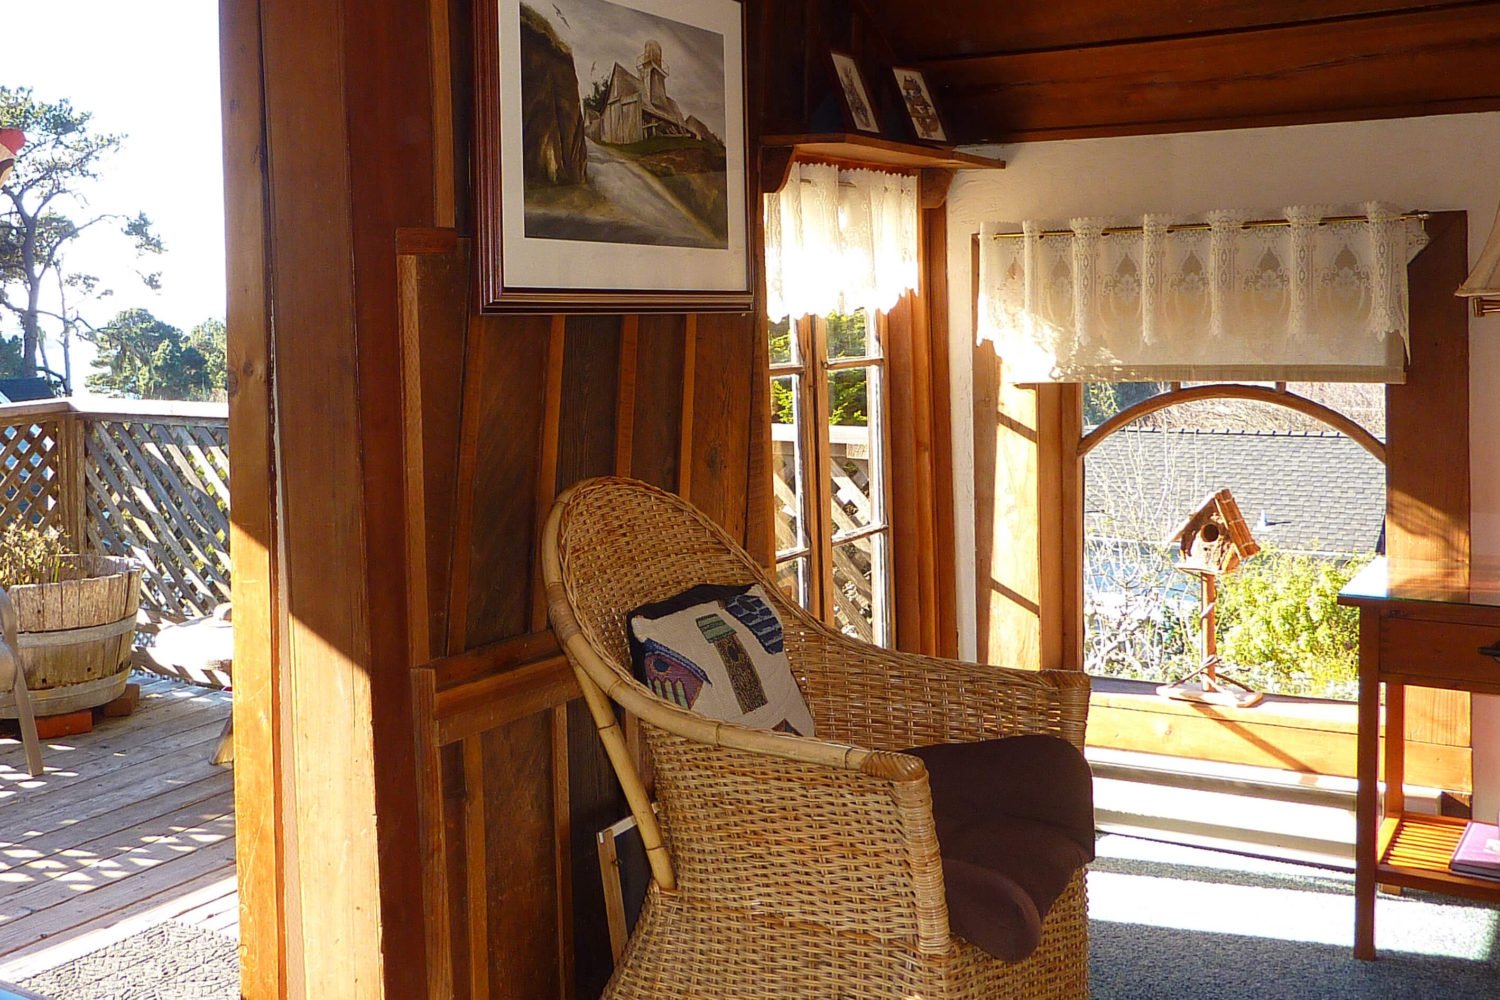 Tree House Room - wicker chair, doors and windows